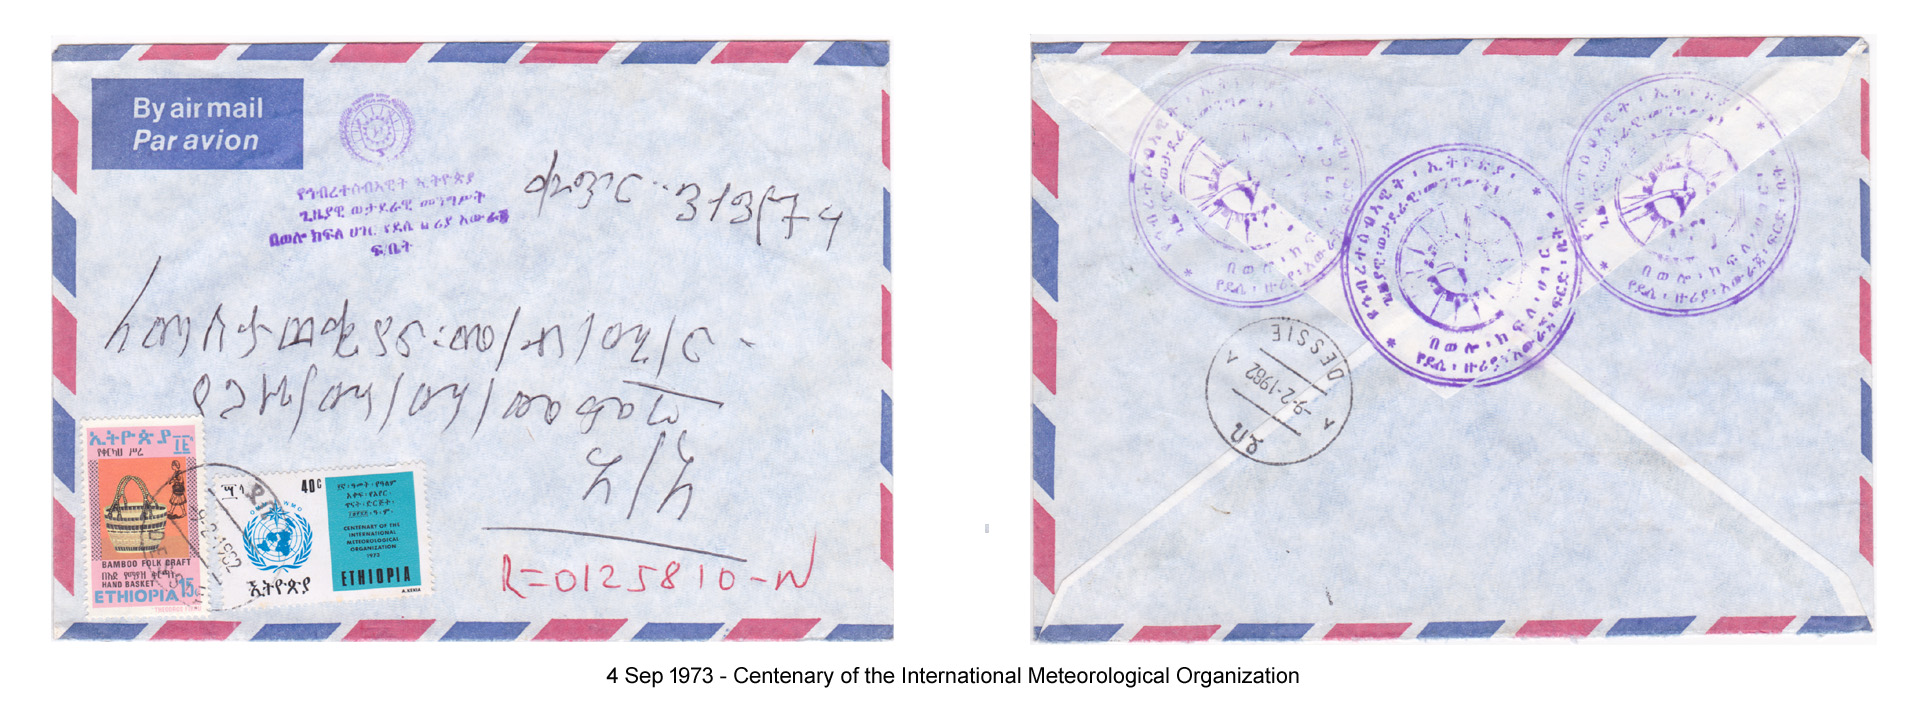 19730904 - Centenary of International Meteorological Organization